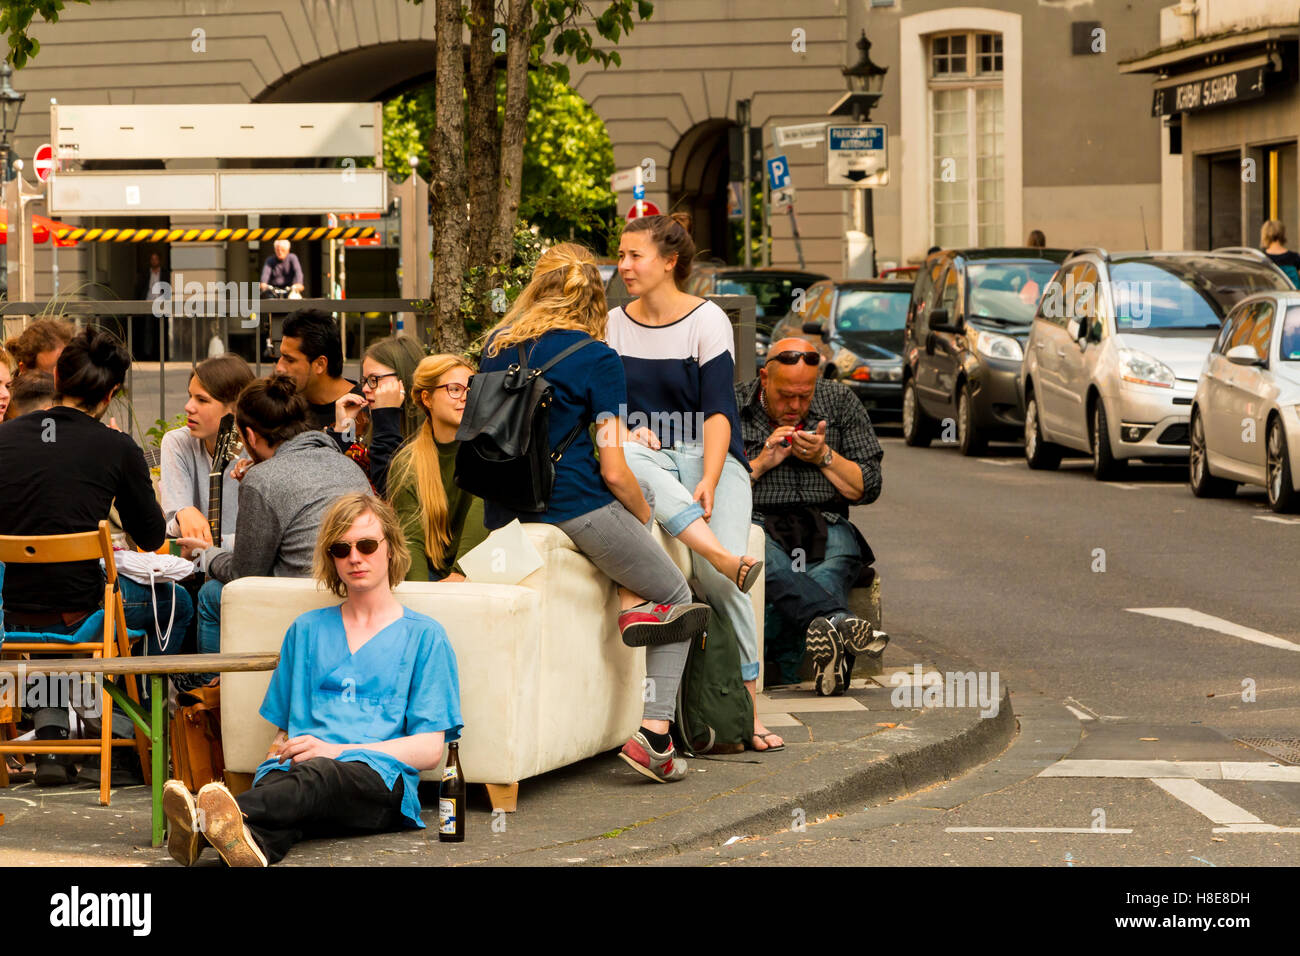 Street scene outside cafe, Bonn, Germany Stock Photo